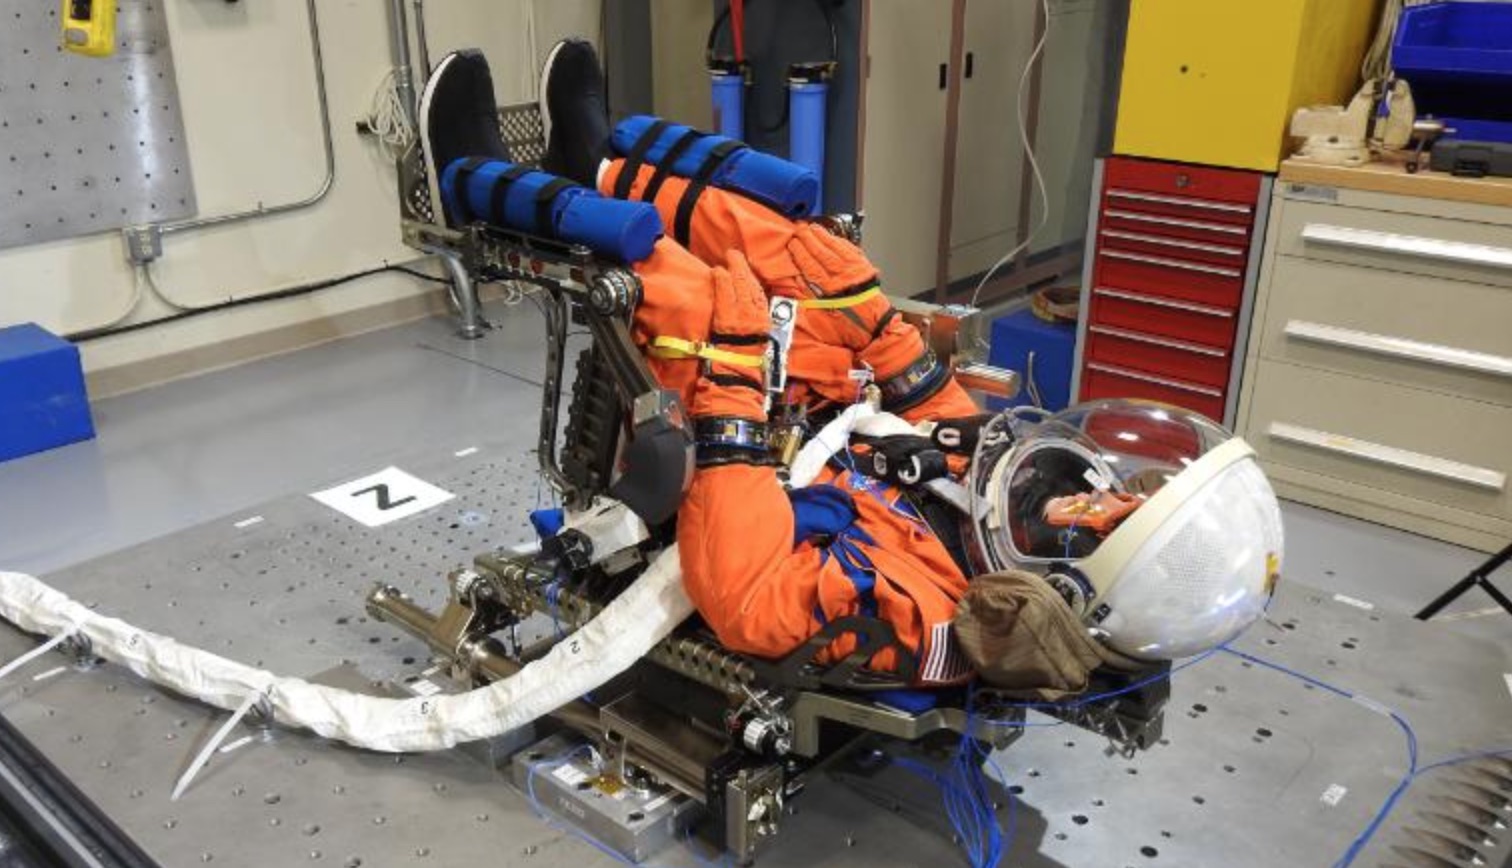 NASA's spacesuit-clad Moonikin Campos mannequin undergoing testing.